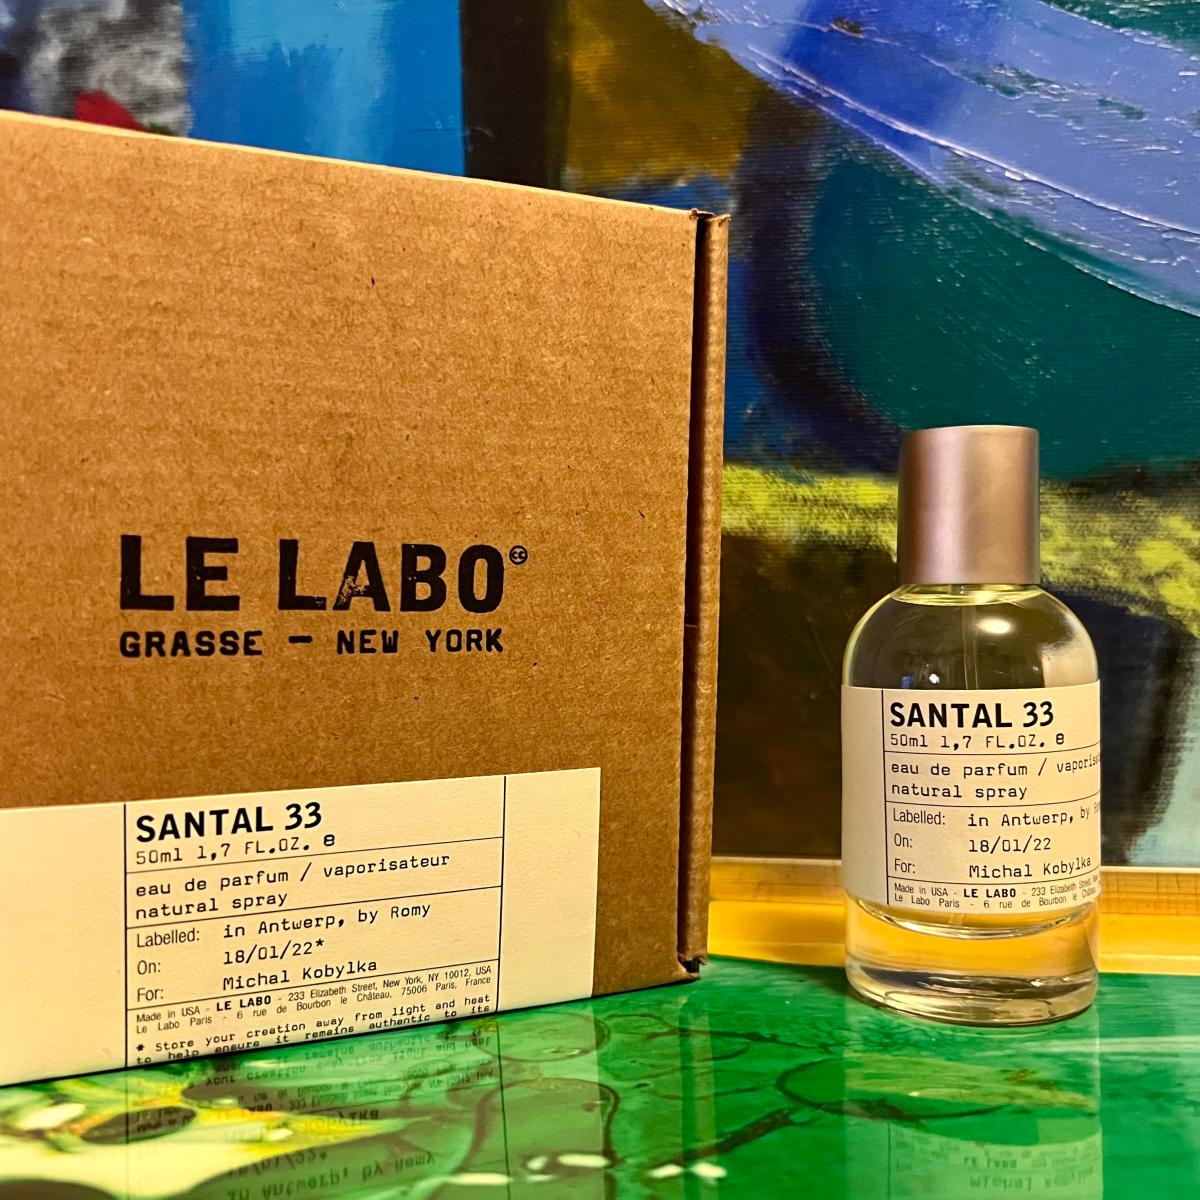 Santal 33 Le Labo perfume - a fragrance for women and men 2011